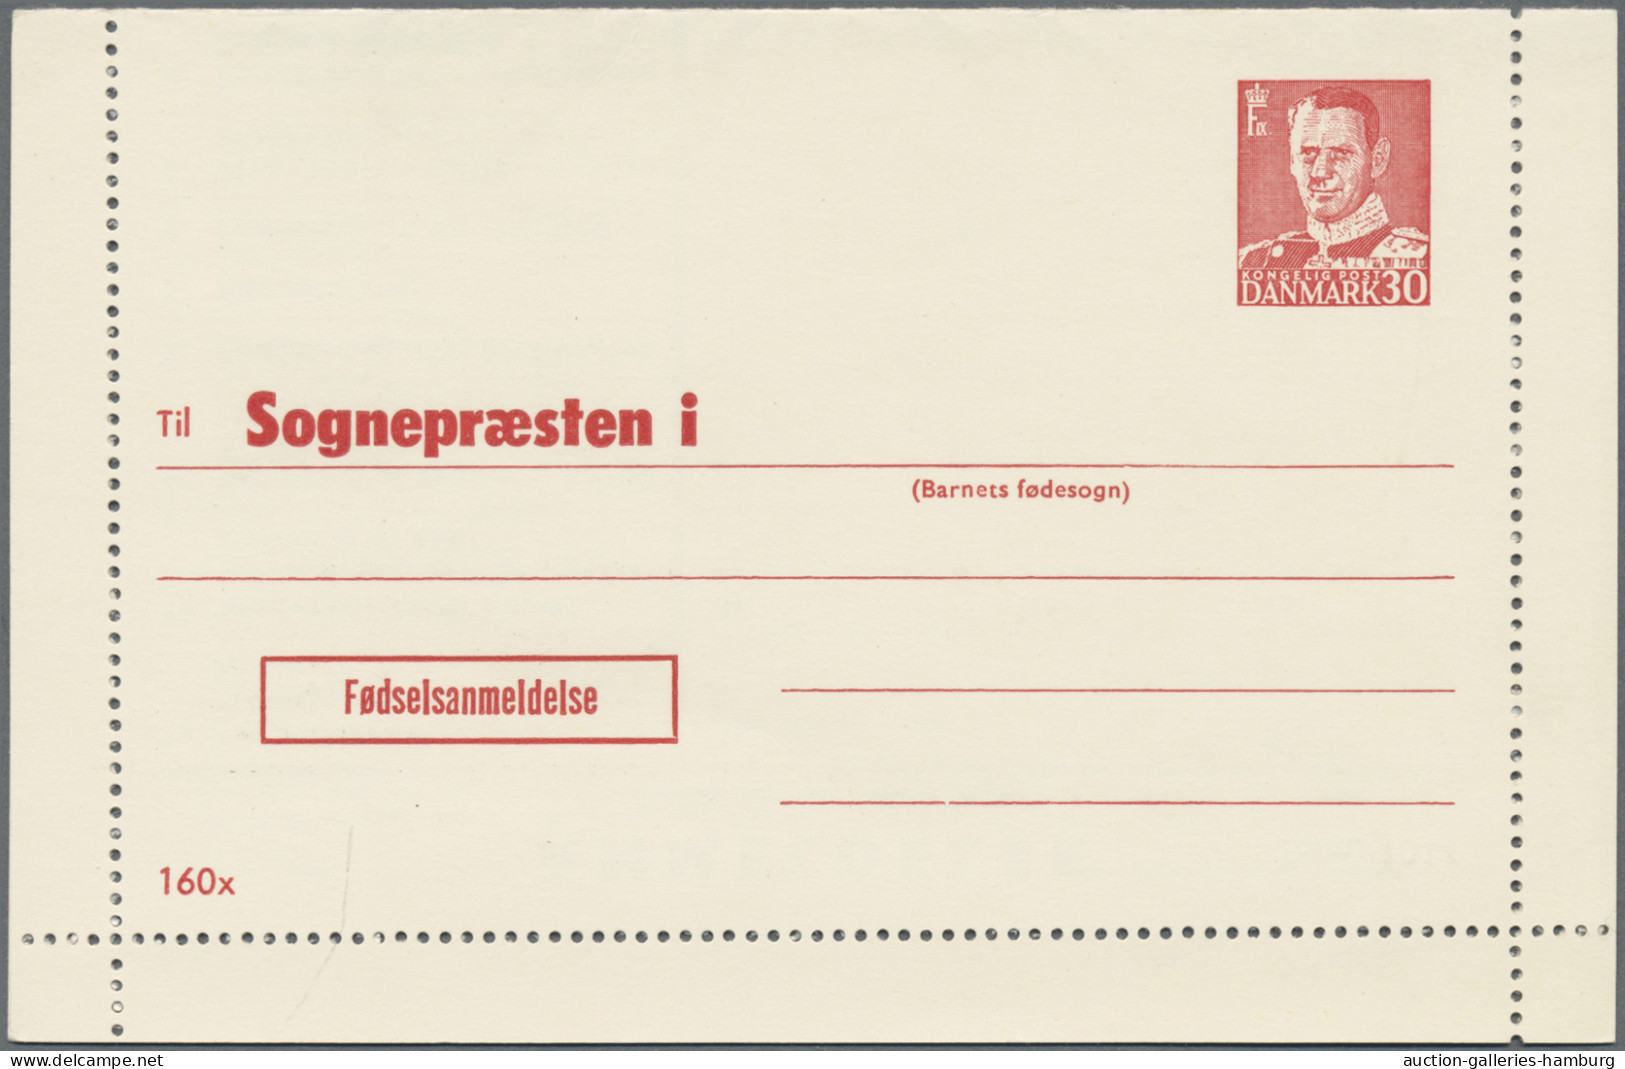 Denmark - Postal Stationery: 1953/1965, Letter Cards For Population Register, Lo - Entiers Postaux